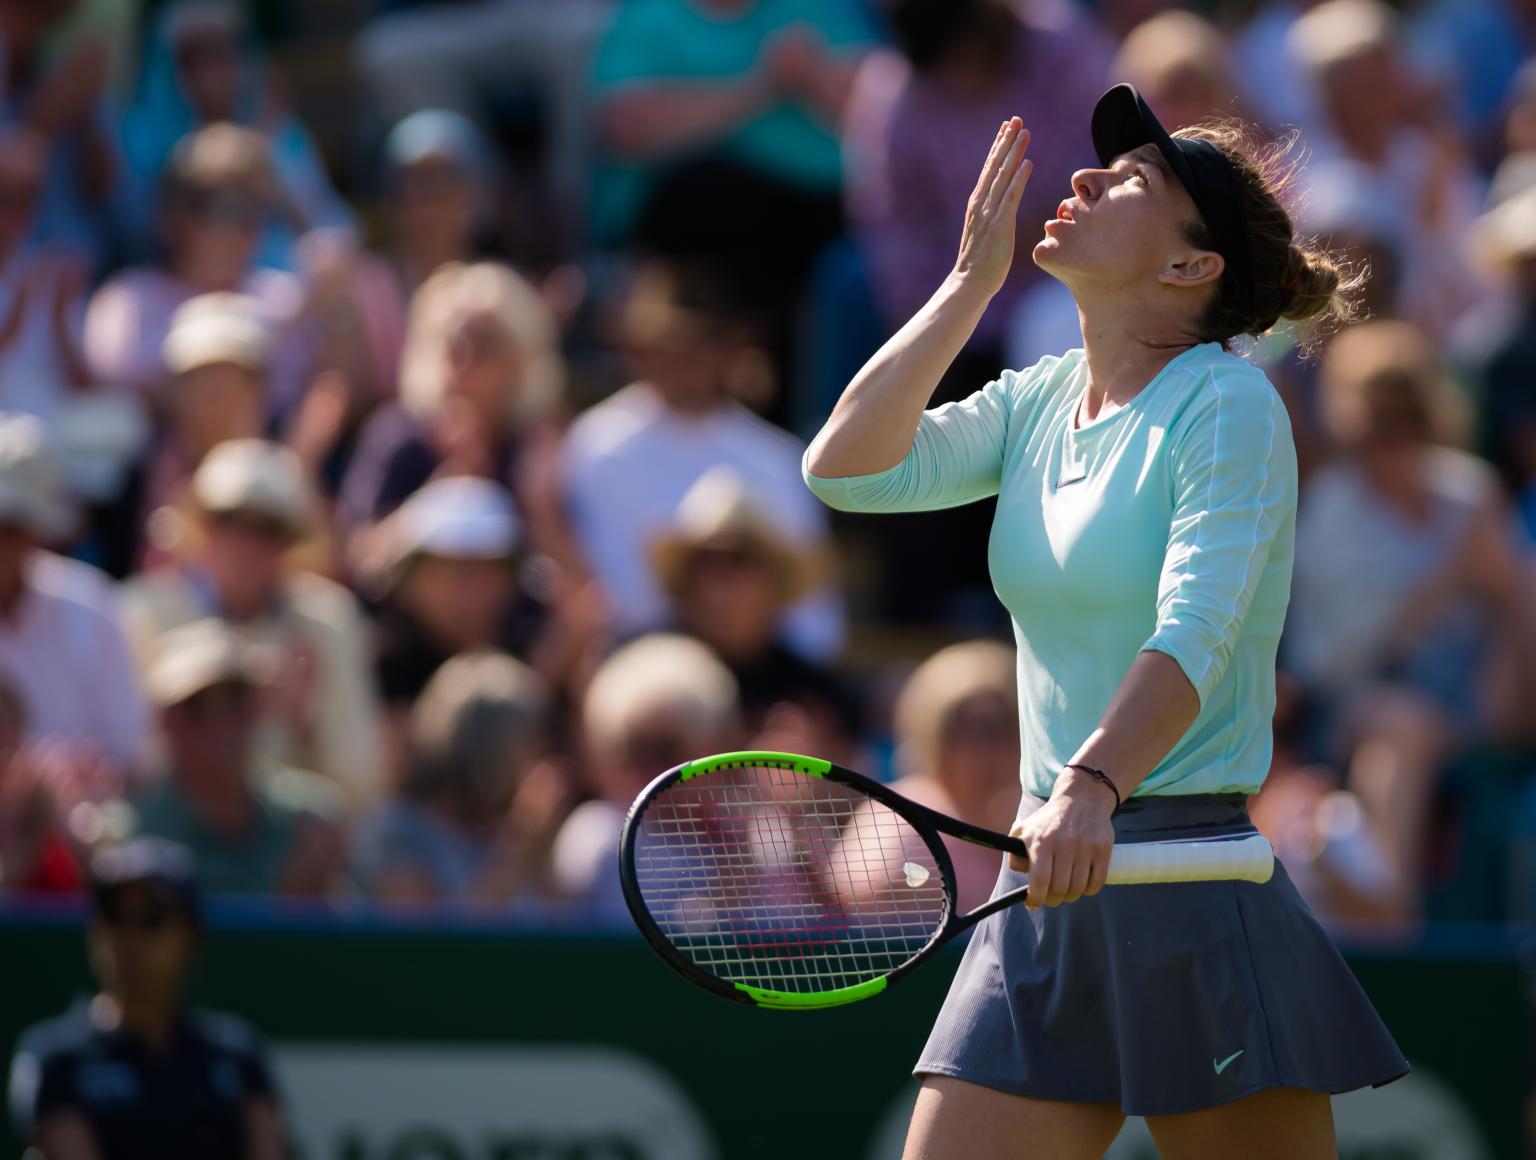 Теннис: рейтинг WTA перед стартом Australian Open 2020